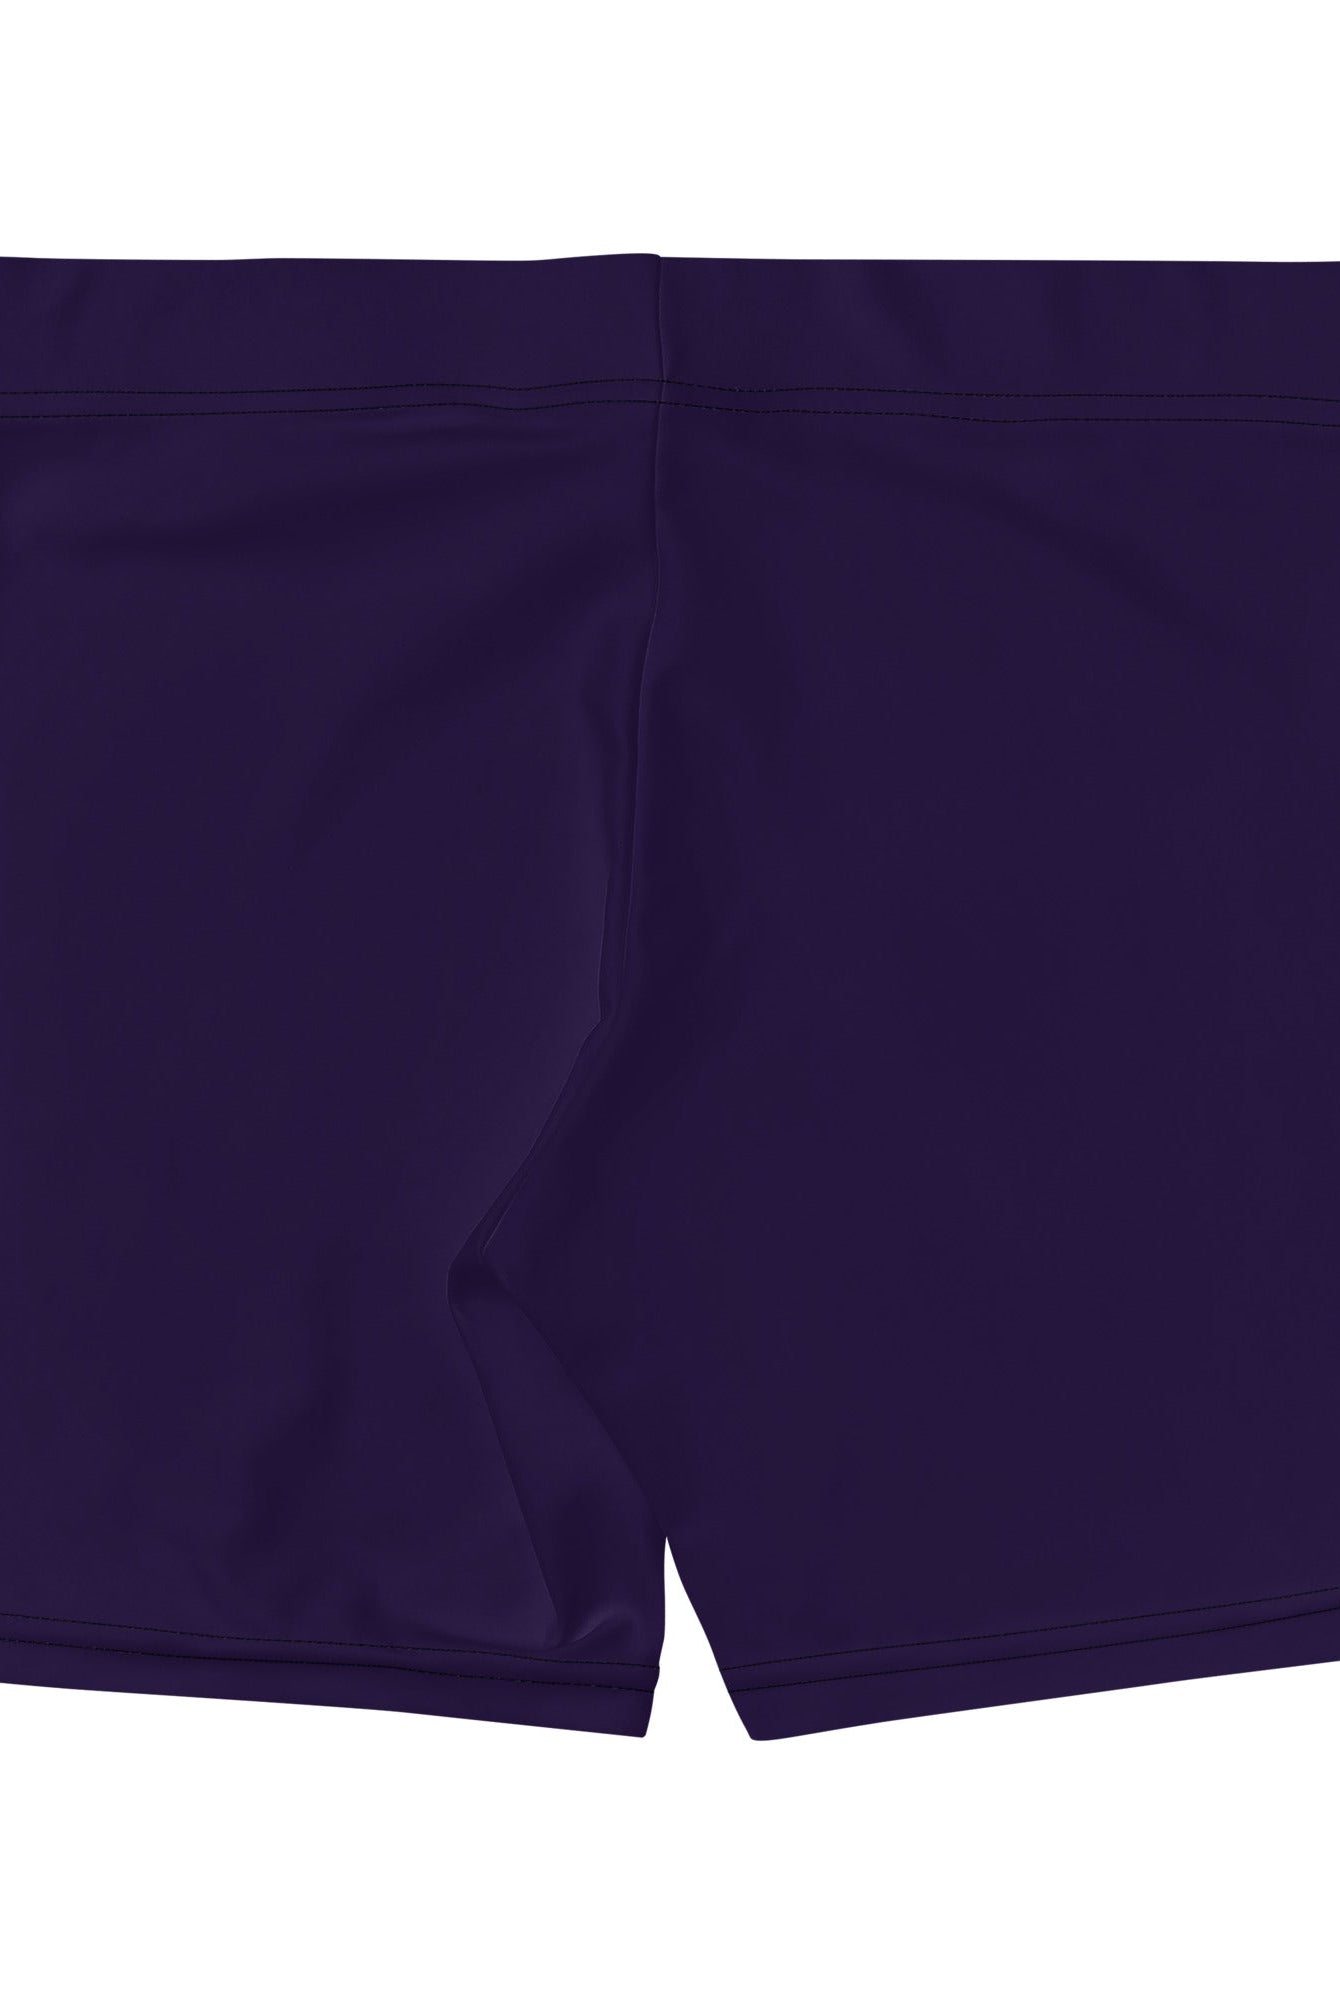 Tolo Pea Gym Shorts - Women's Gym Shorts - DRAGON FOXX™ - Tolo Pea Gym Shorts - 7352500_9296 - XS - Tolo Pea - Gym Shorts - Dragon Foxx™ - Dragon Foxx™ Gym Shorts - Dragon Foxx™ Tolo pea Gym Shorts